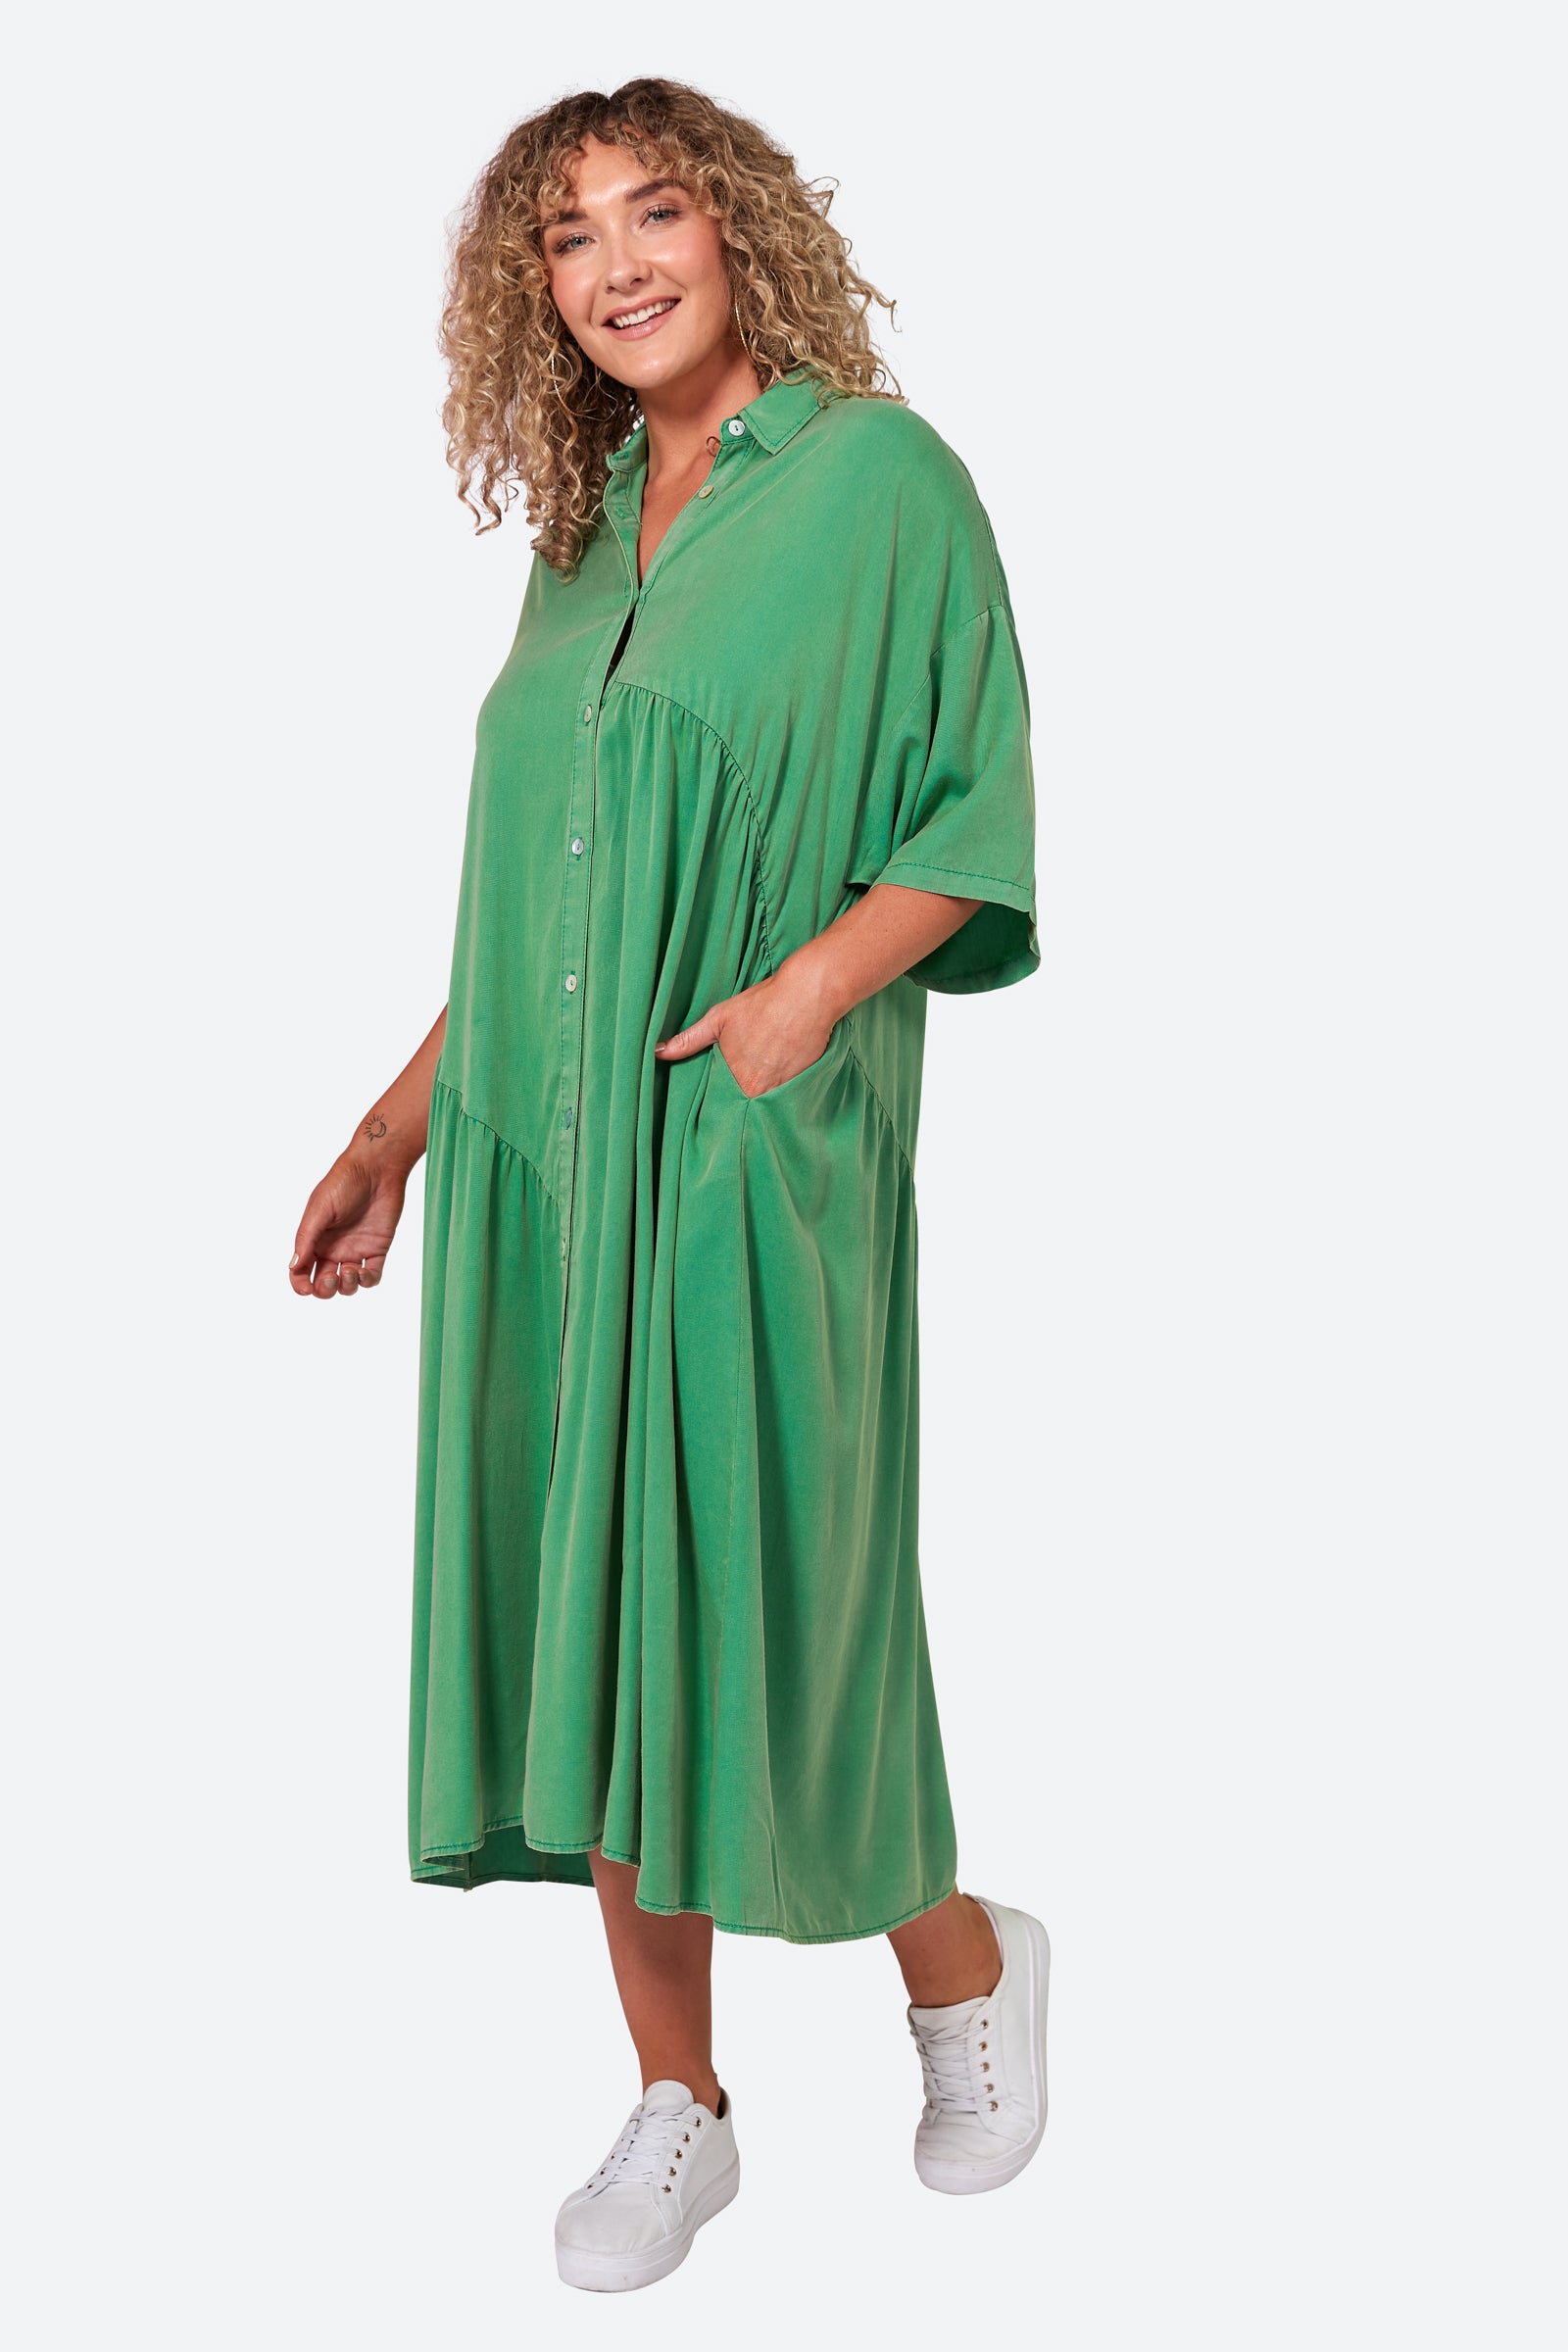 Elan Shirt Dress - Meadow - eb&ive Clothing - Shirt Dress One Size